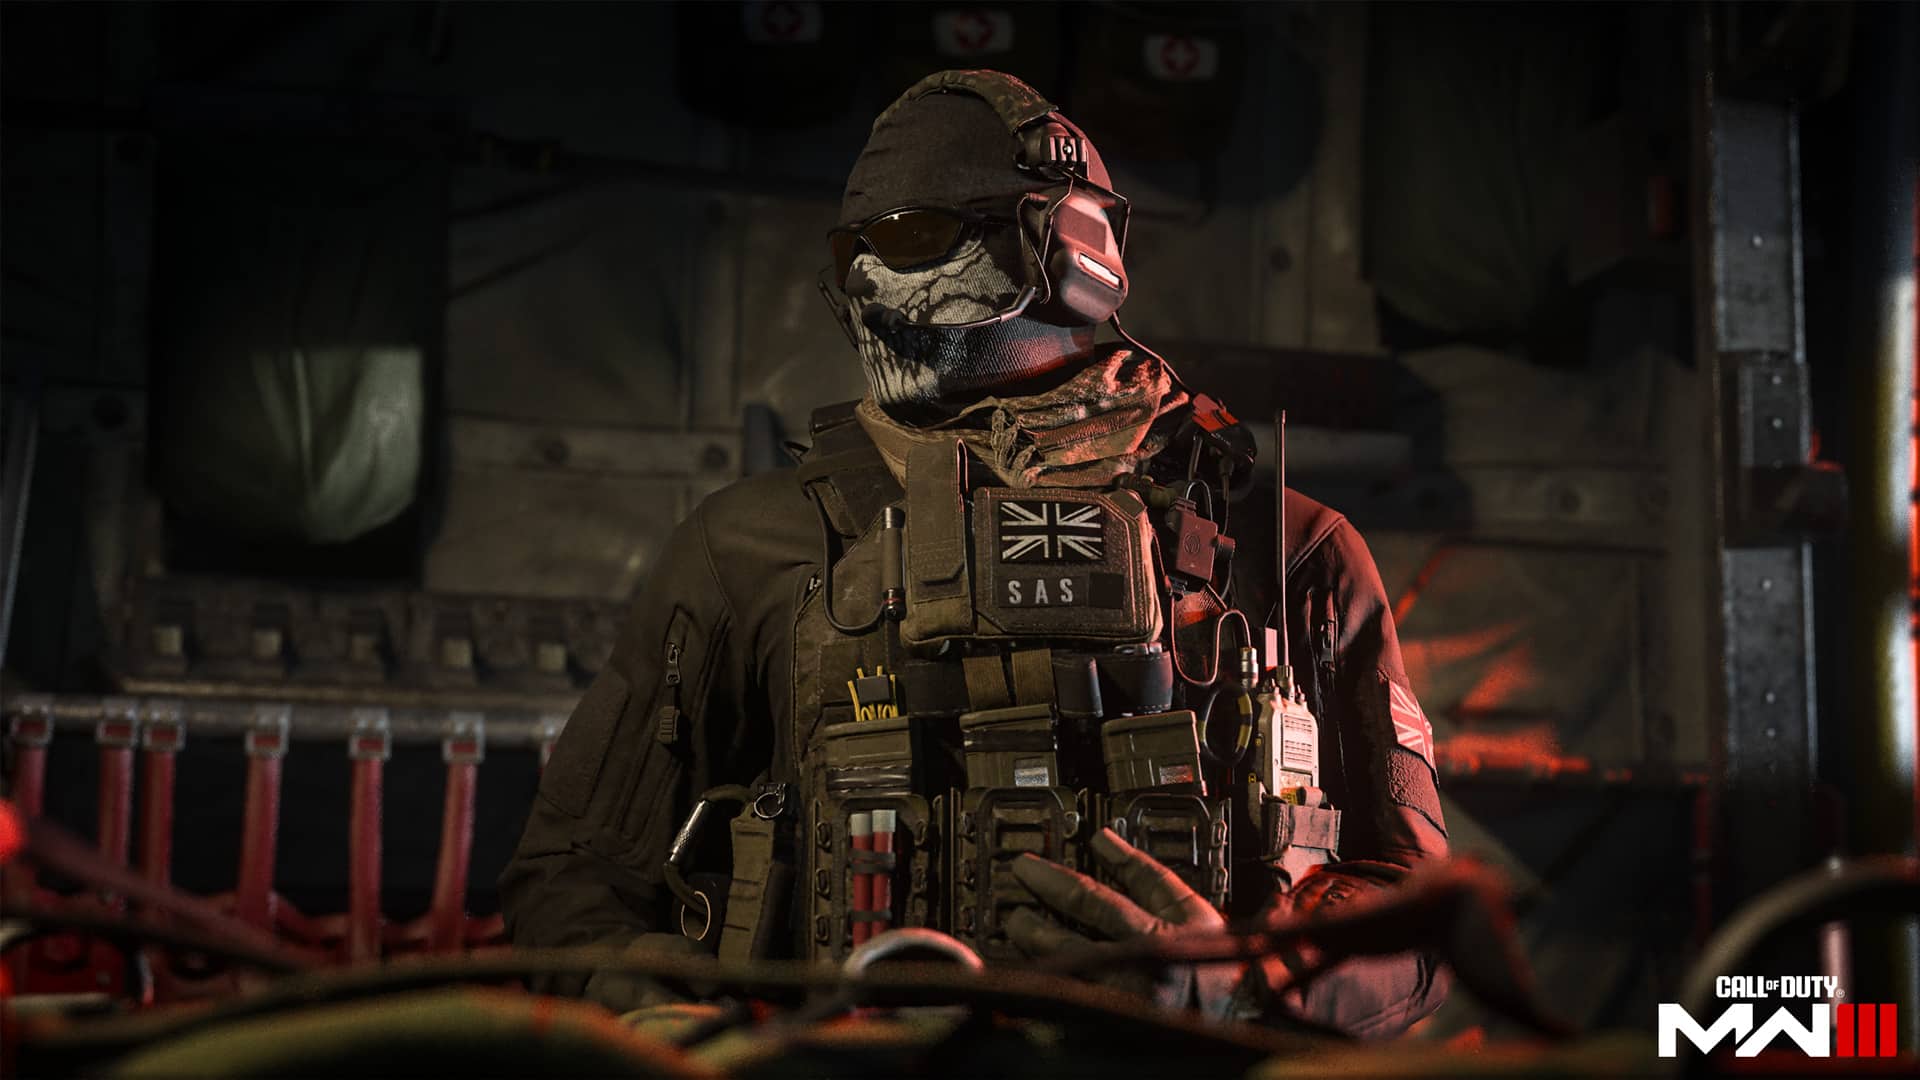 Modern Warfare 3 Multiplayer Gameplay Footage Leaks, Showcases Sniping